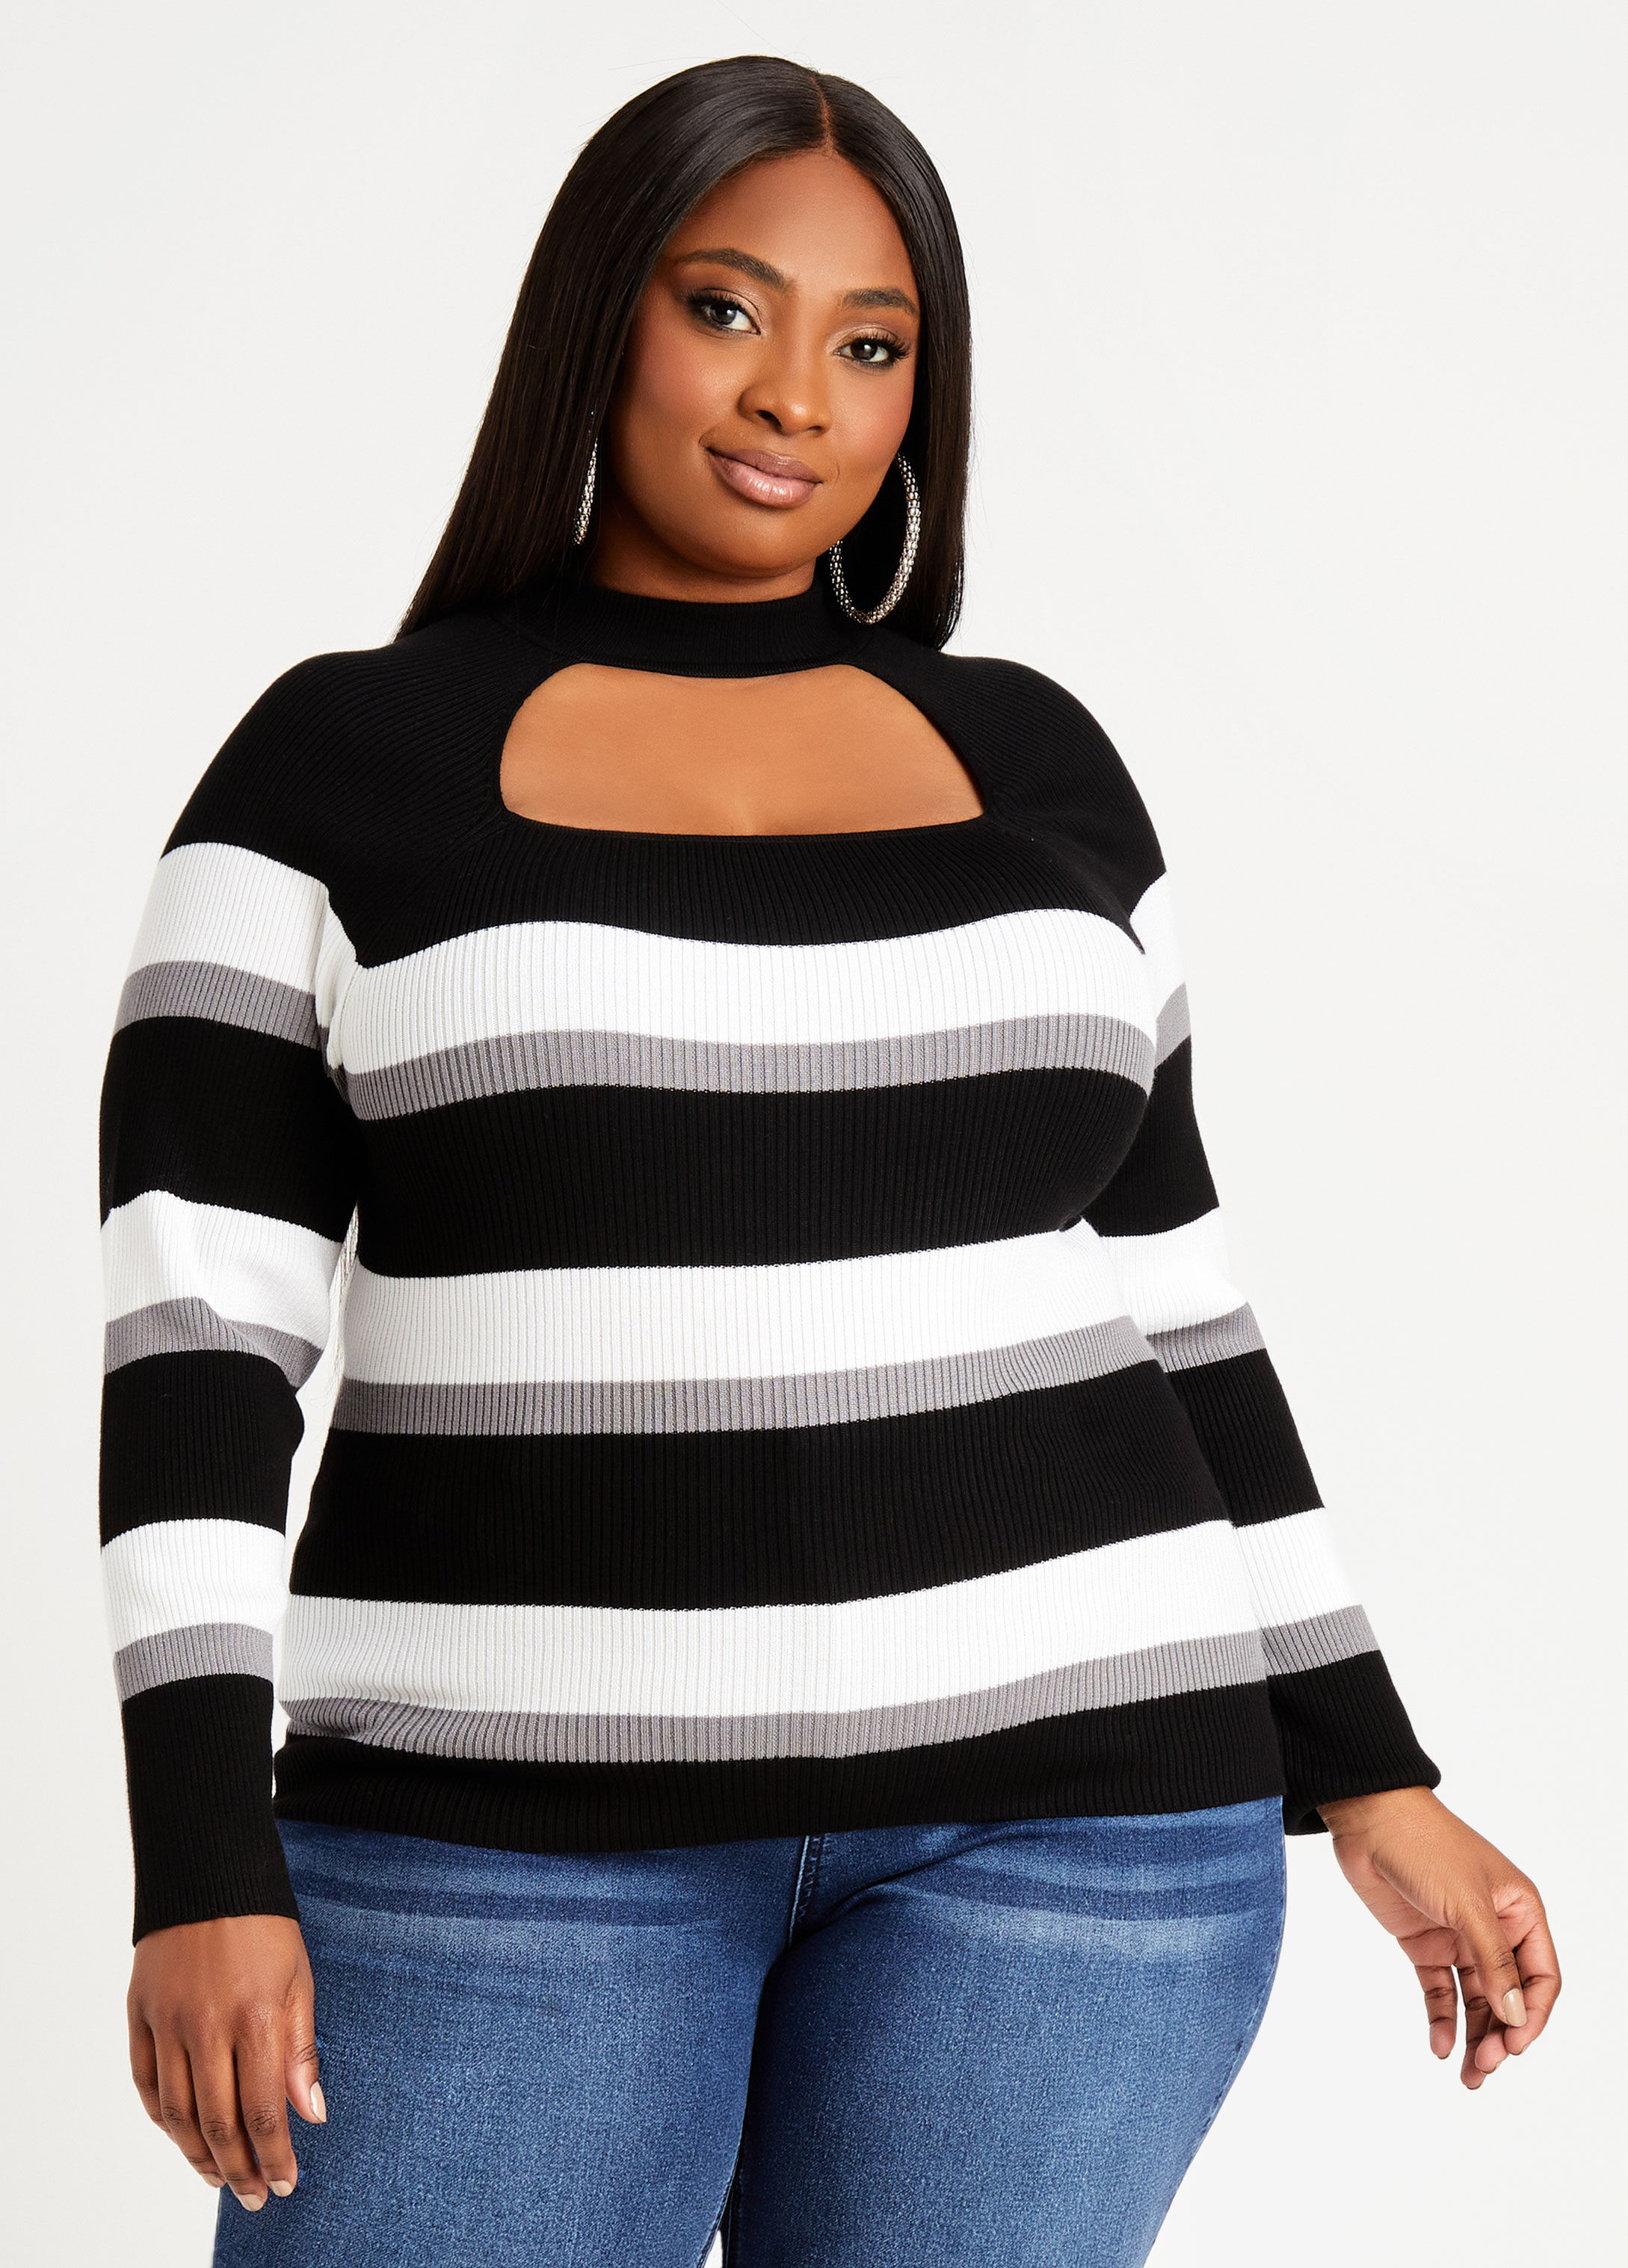 Maxi Blouse SALE Black Sweater Black Woolen Top Maxi Sweater Black Sweater Plus Size Sweater